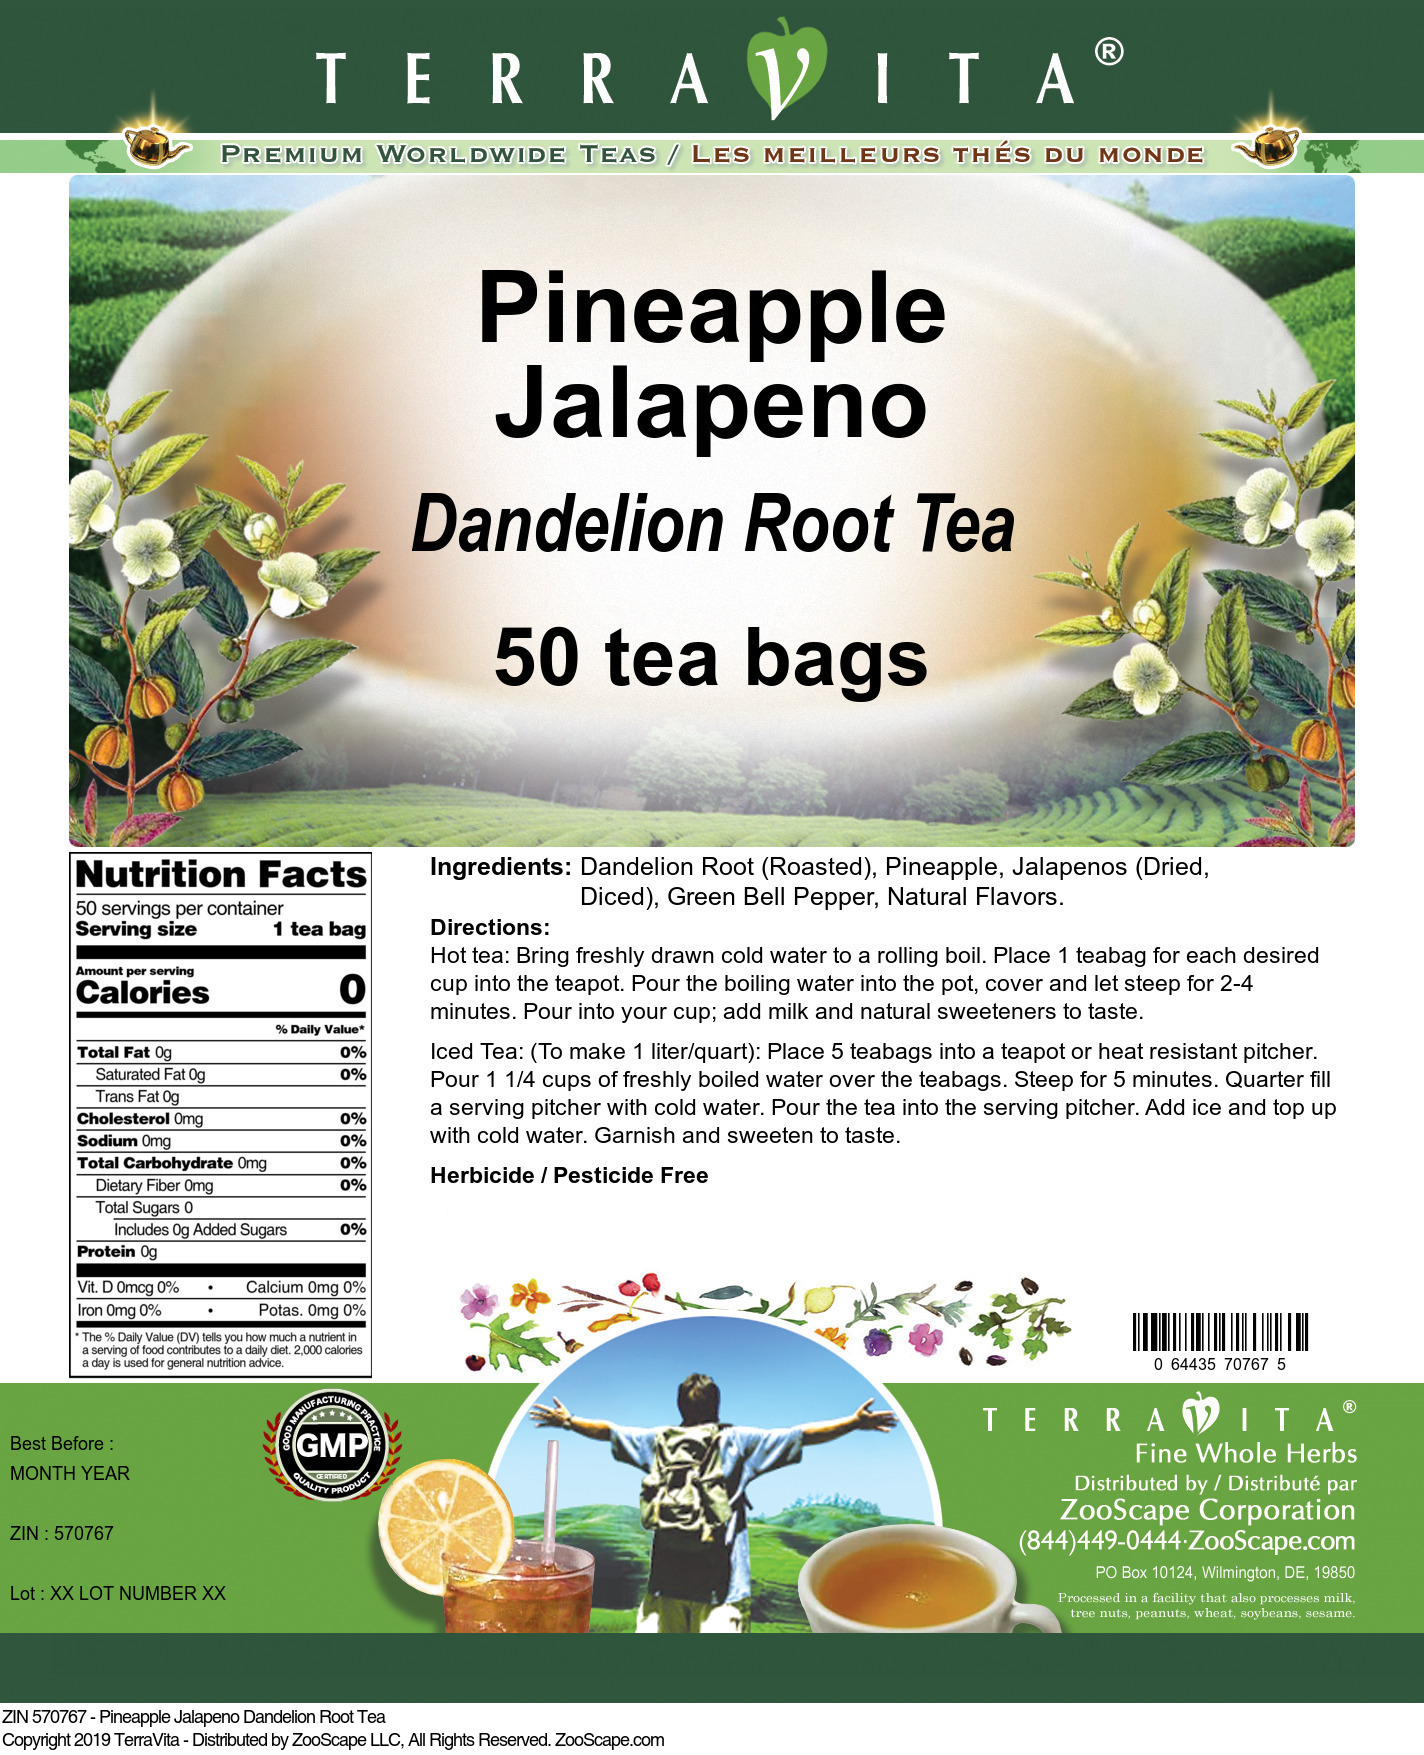 Pineapple Jalapeno Dandelion Root Tea - Label